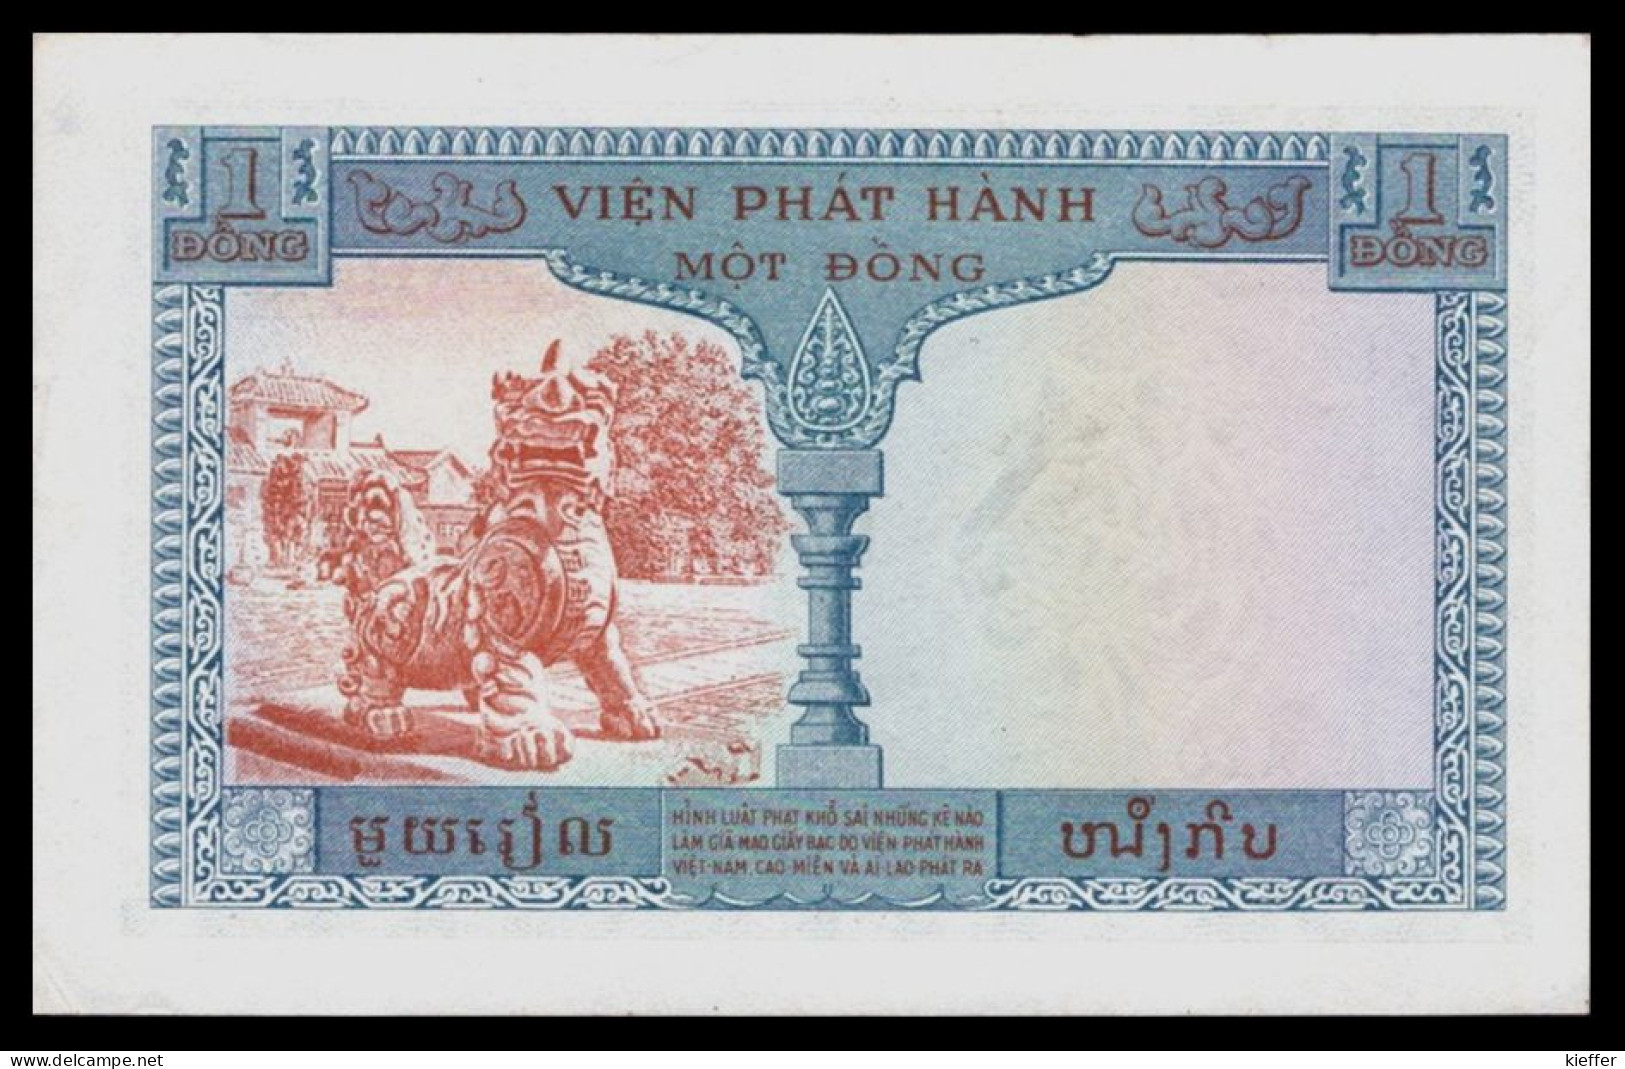 INDOCHINE - VIETNAM - Etats CAMBODGE LAOS VIETNAM - 1 Piastre - 1954 - P 105 - A20 - SPL - Indochina